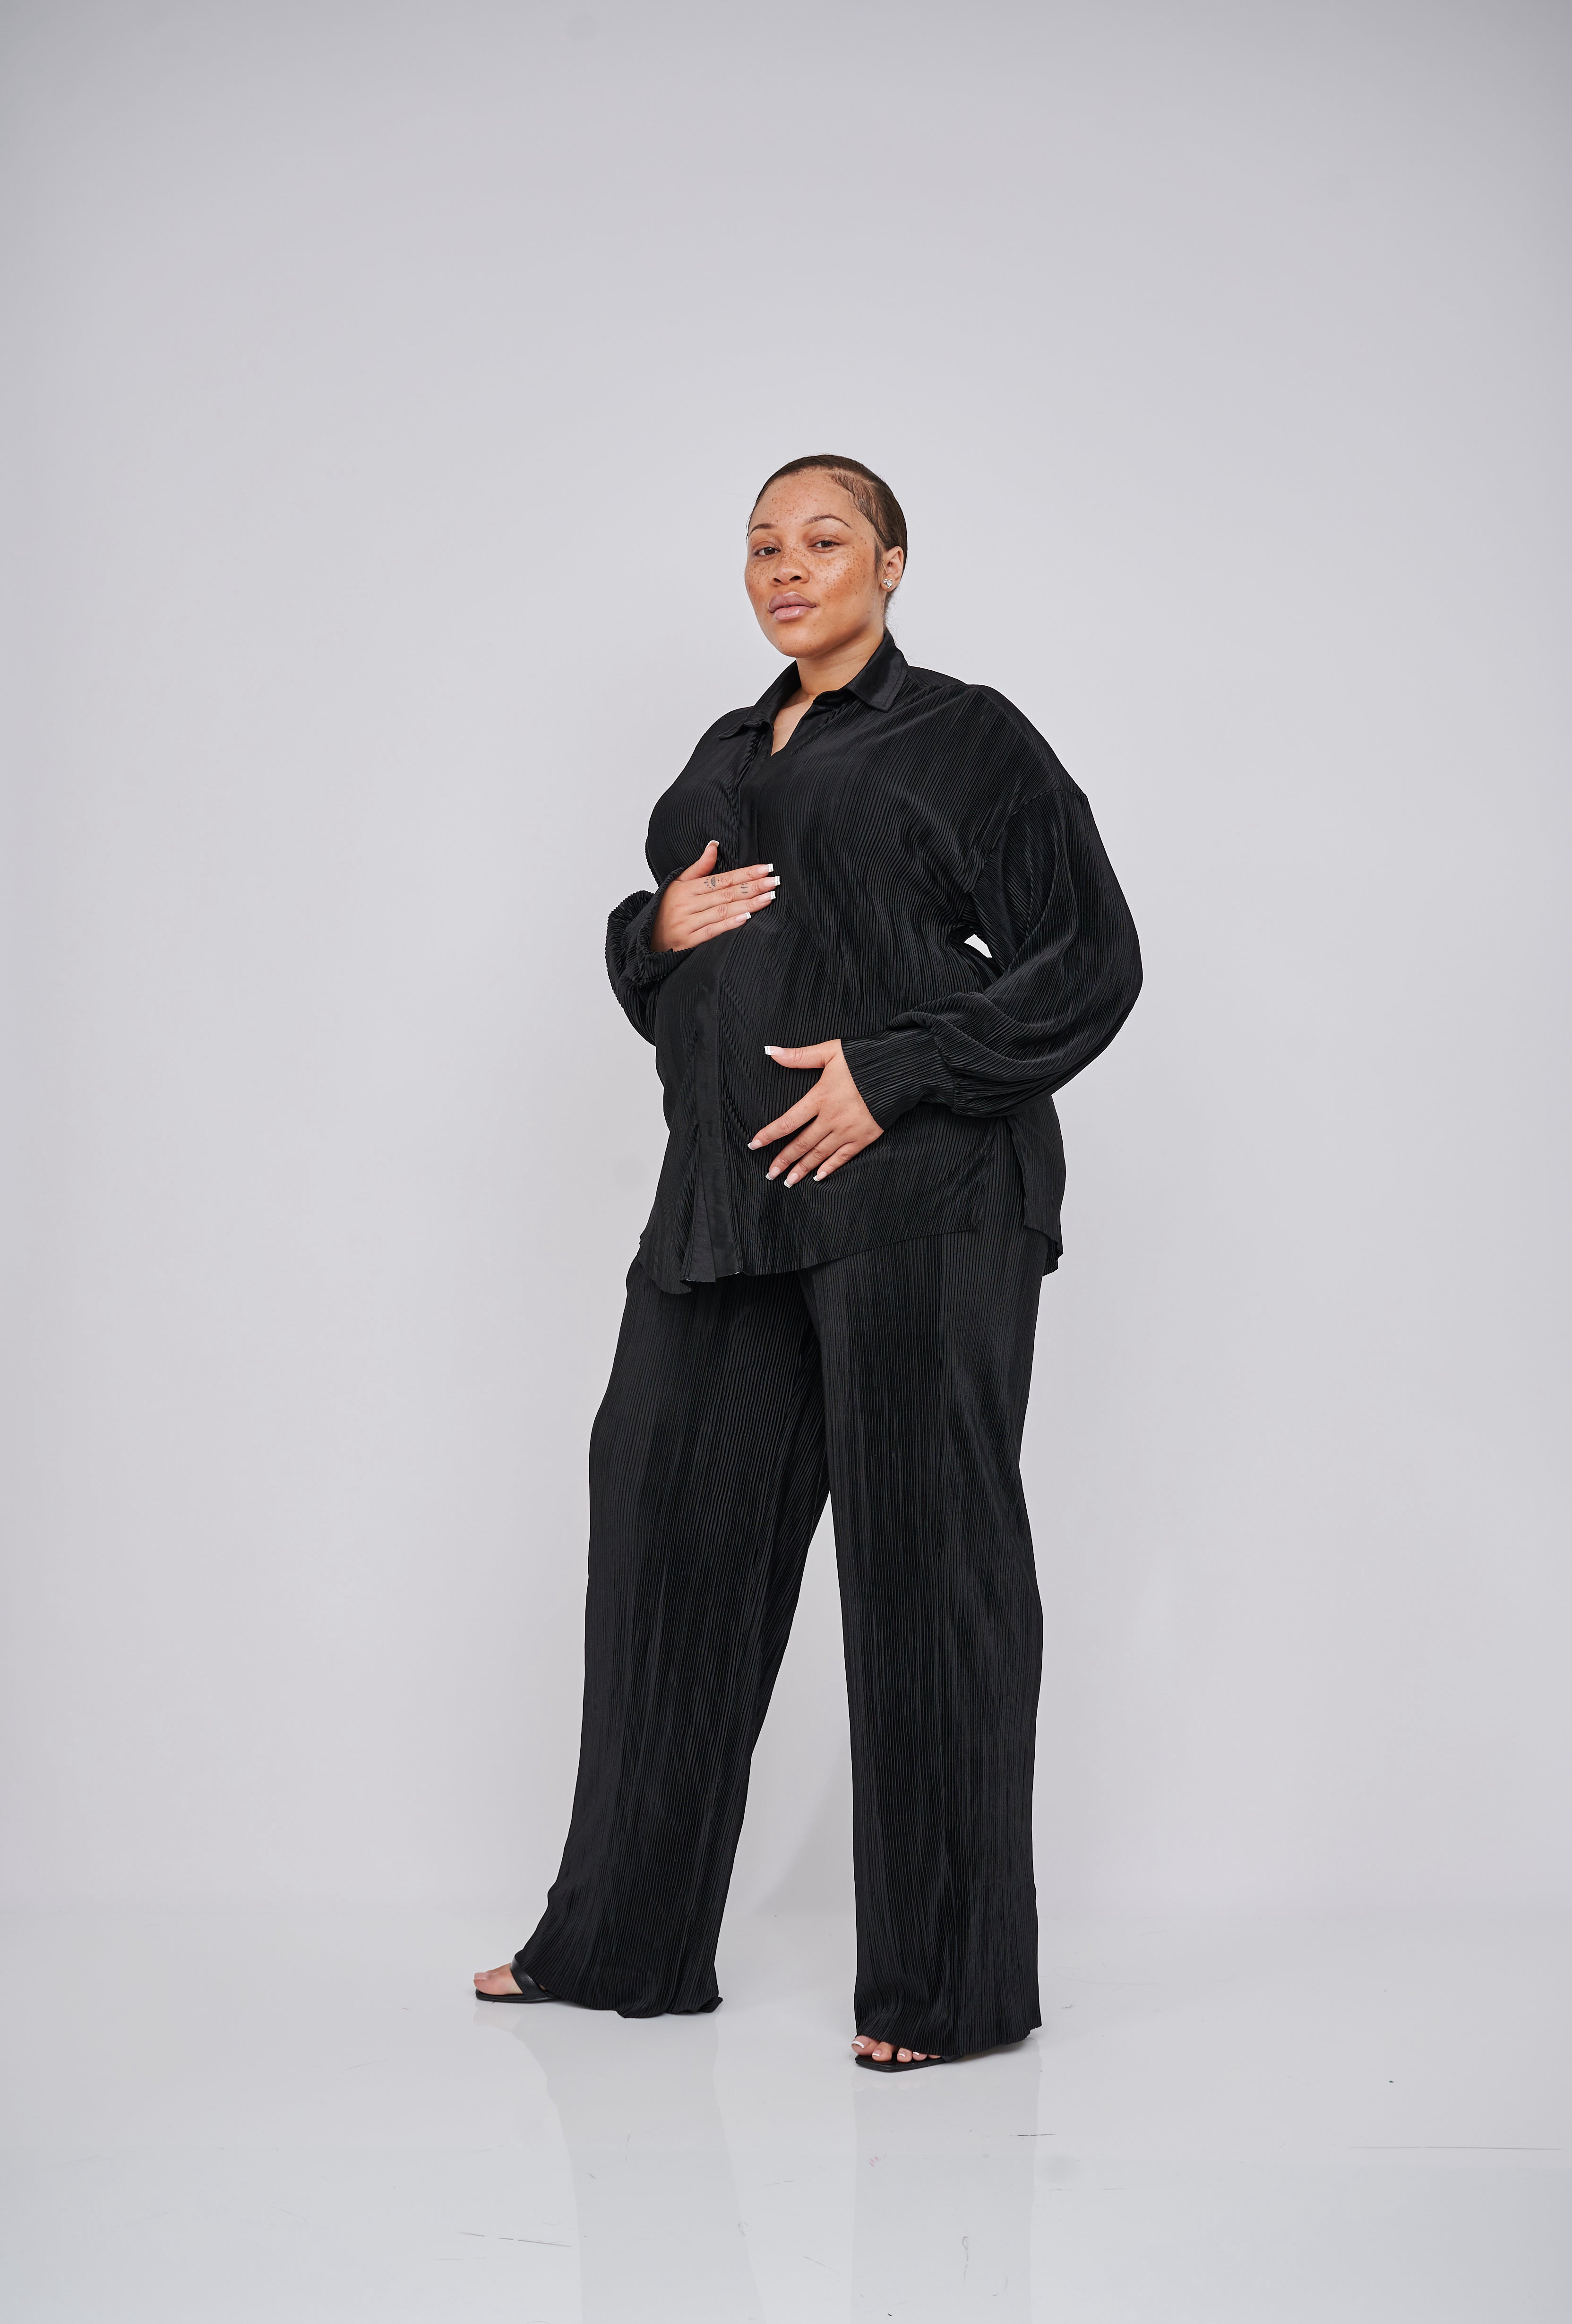 Blaklader 7100 Hi-Vis Maternity Trousers 4-Way-Stretch - Womens (71001642)  | Maternity trousers, Maternity, Work trousers